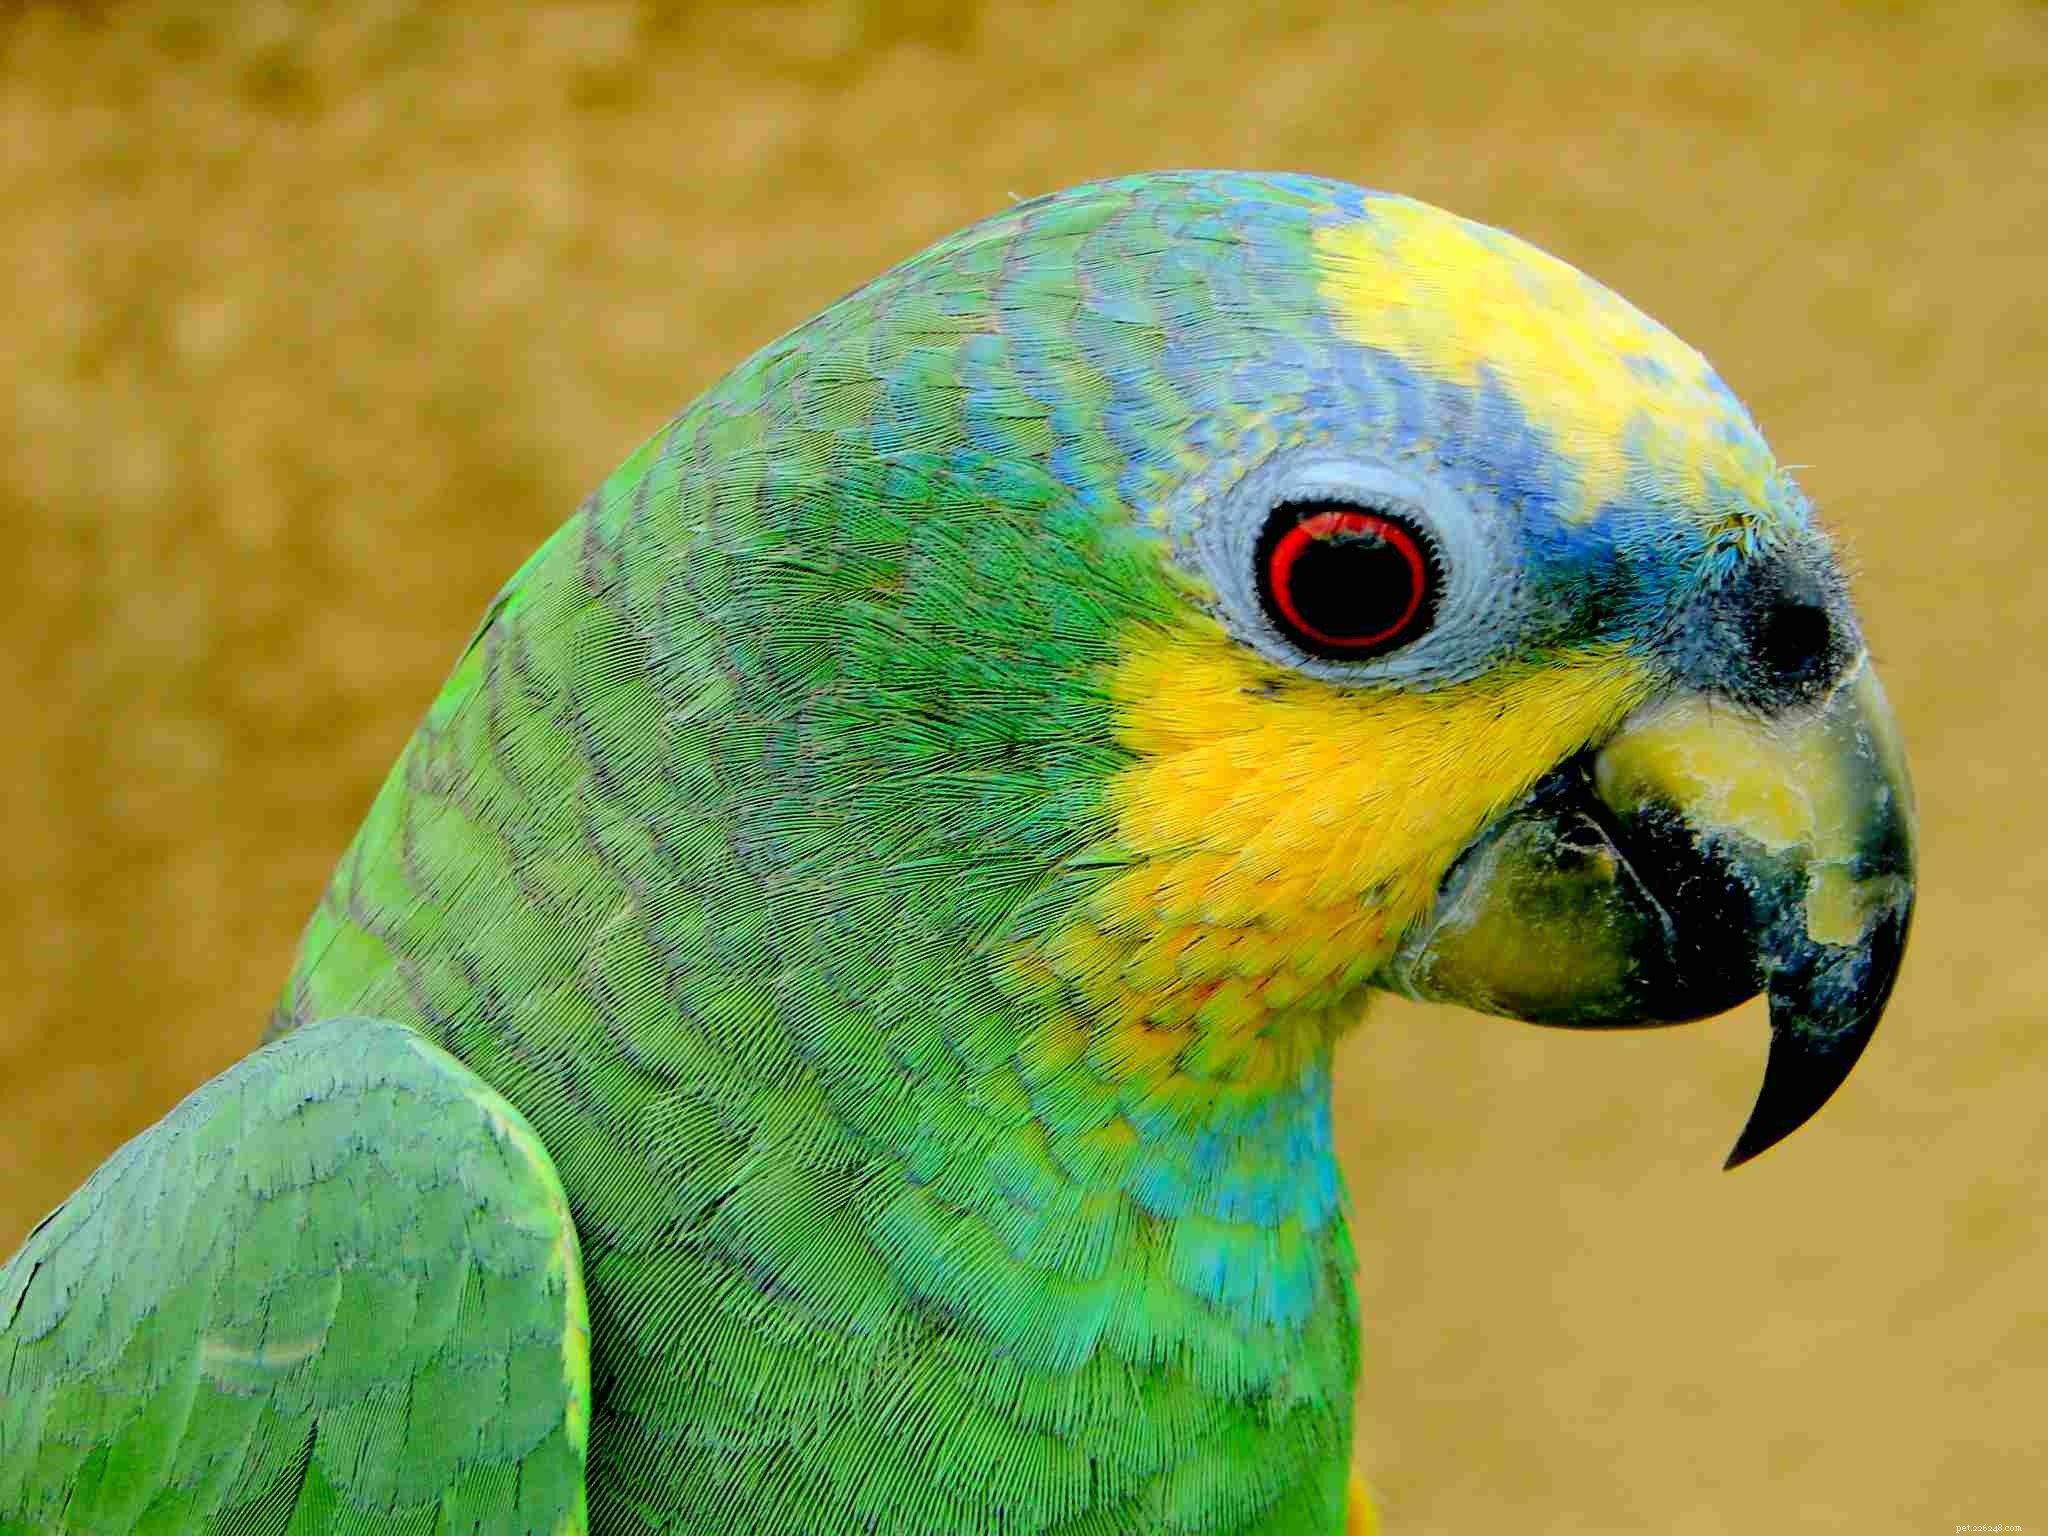 Papagaio-de-asa-laranja:perfil da espécie de pássaro